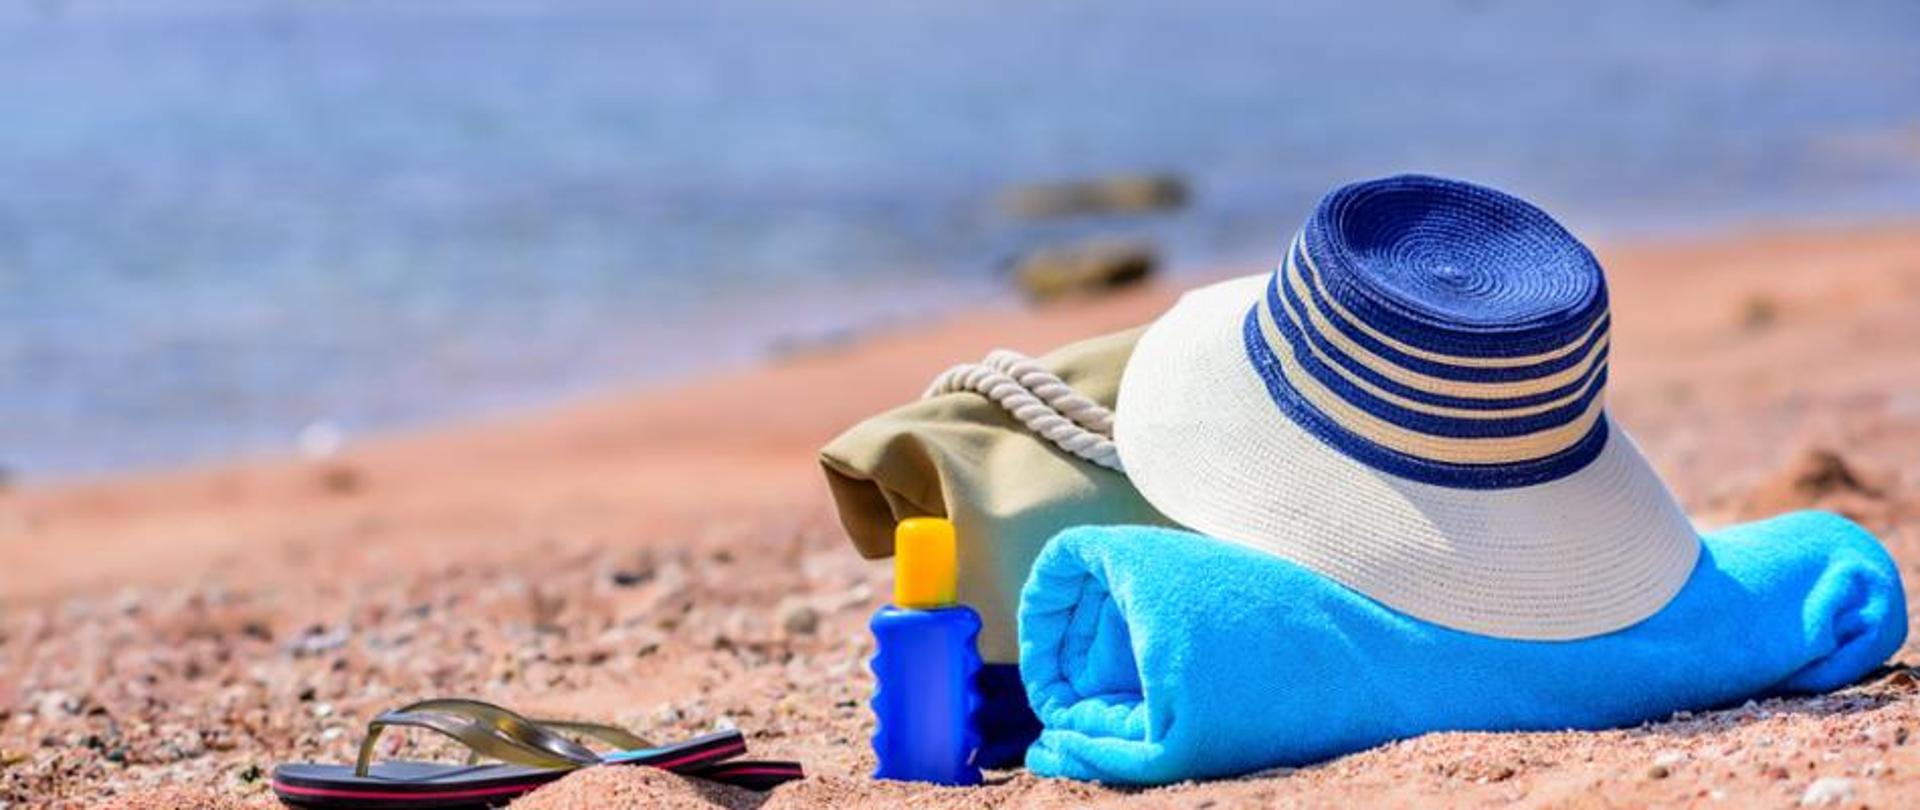 Na plaży nad wodą leżą kapelusz, ręcznik, olejek do opalania, klapek